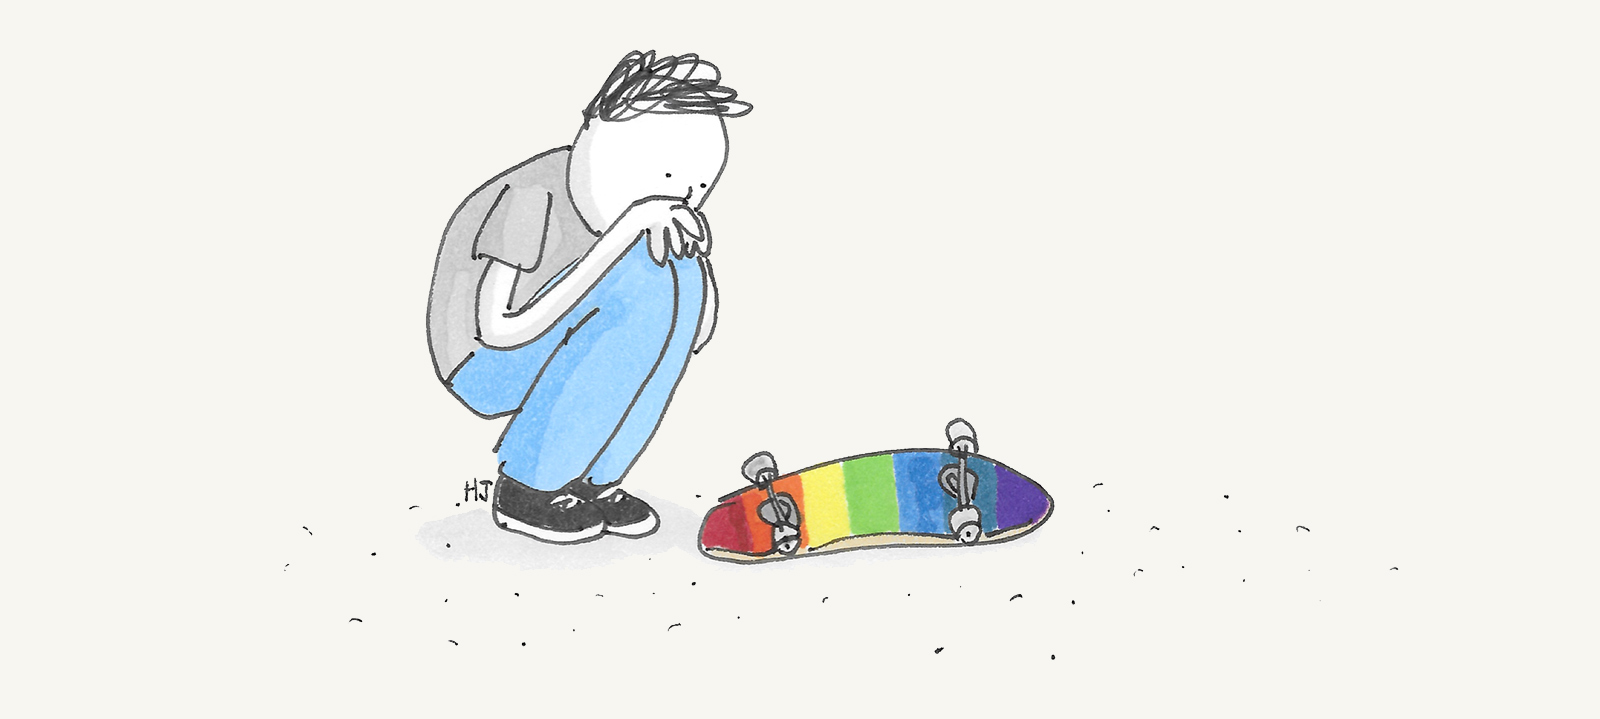 henry_jones_skateboarding_everyone_1